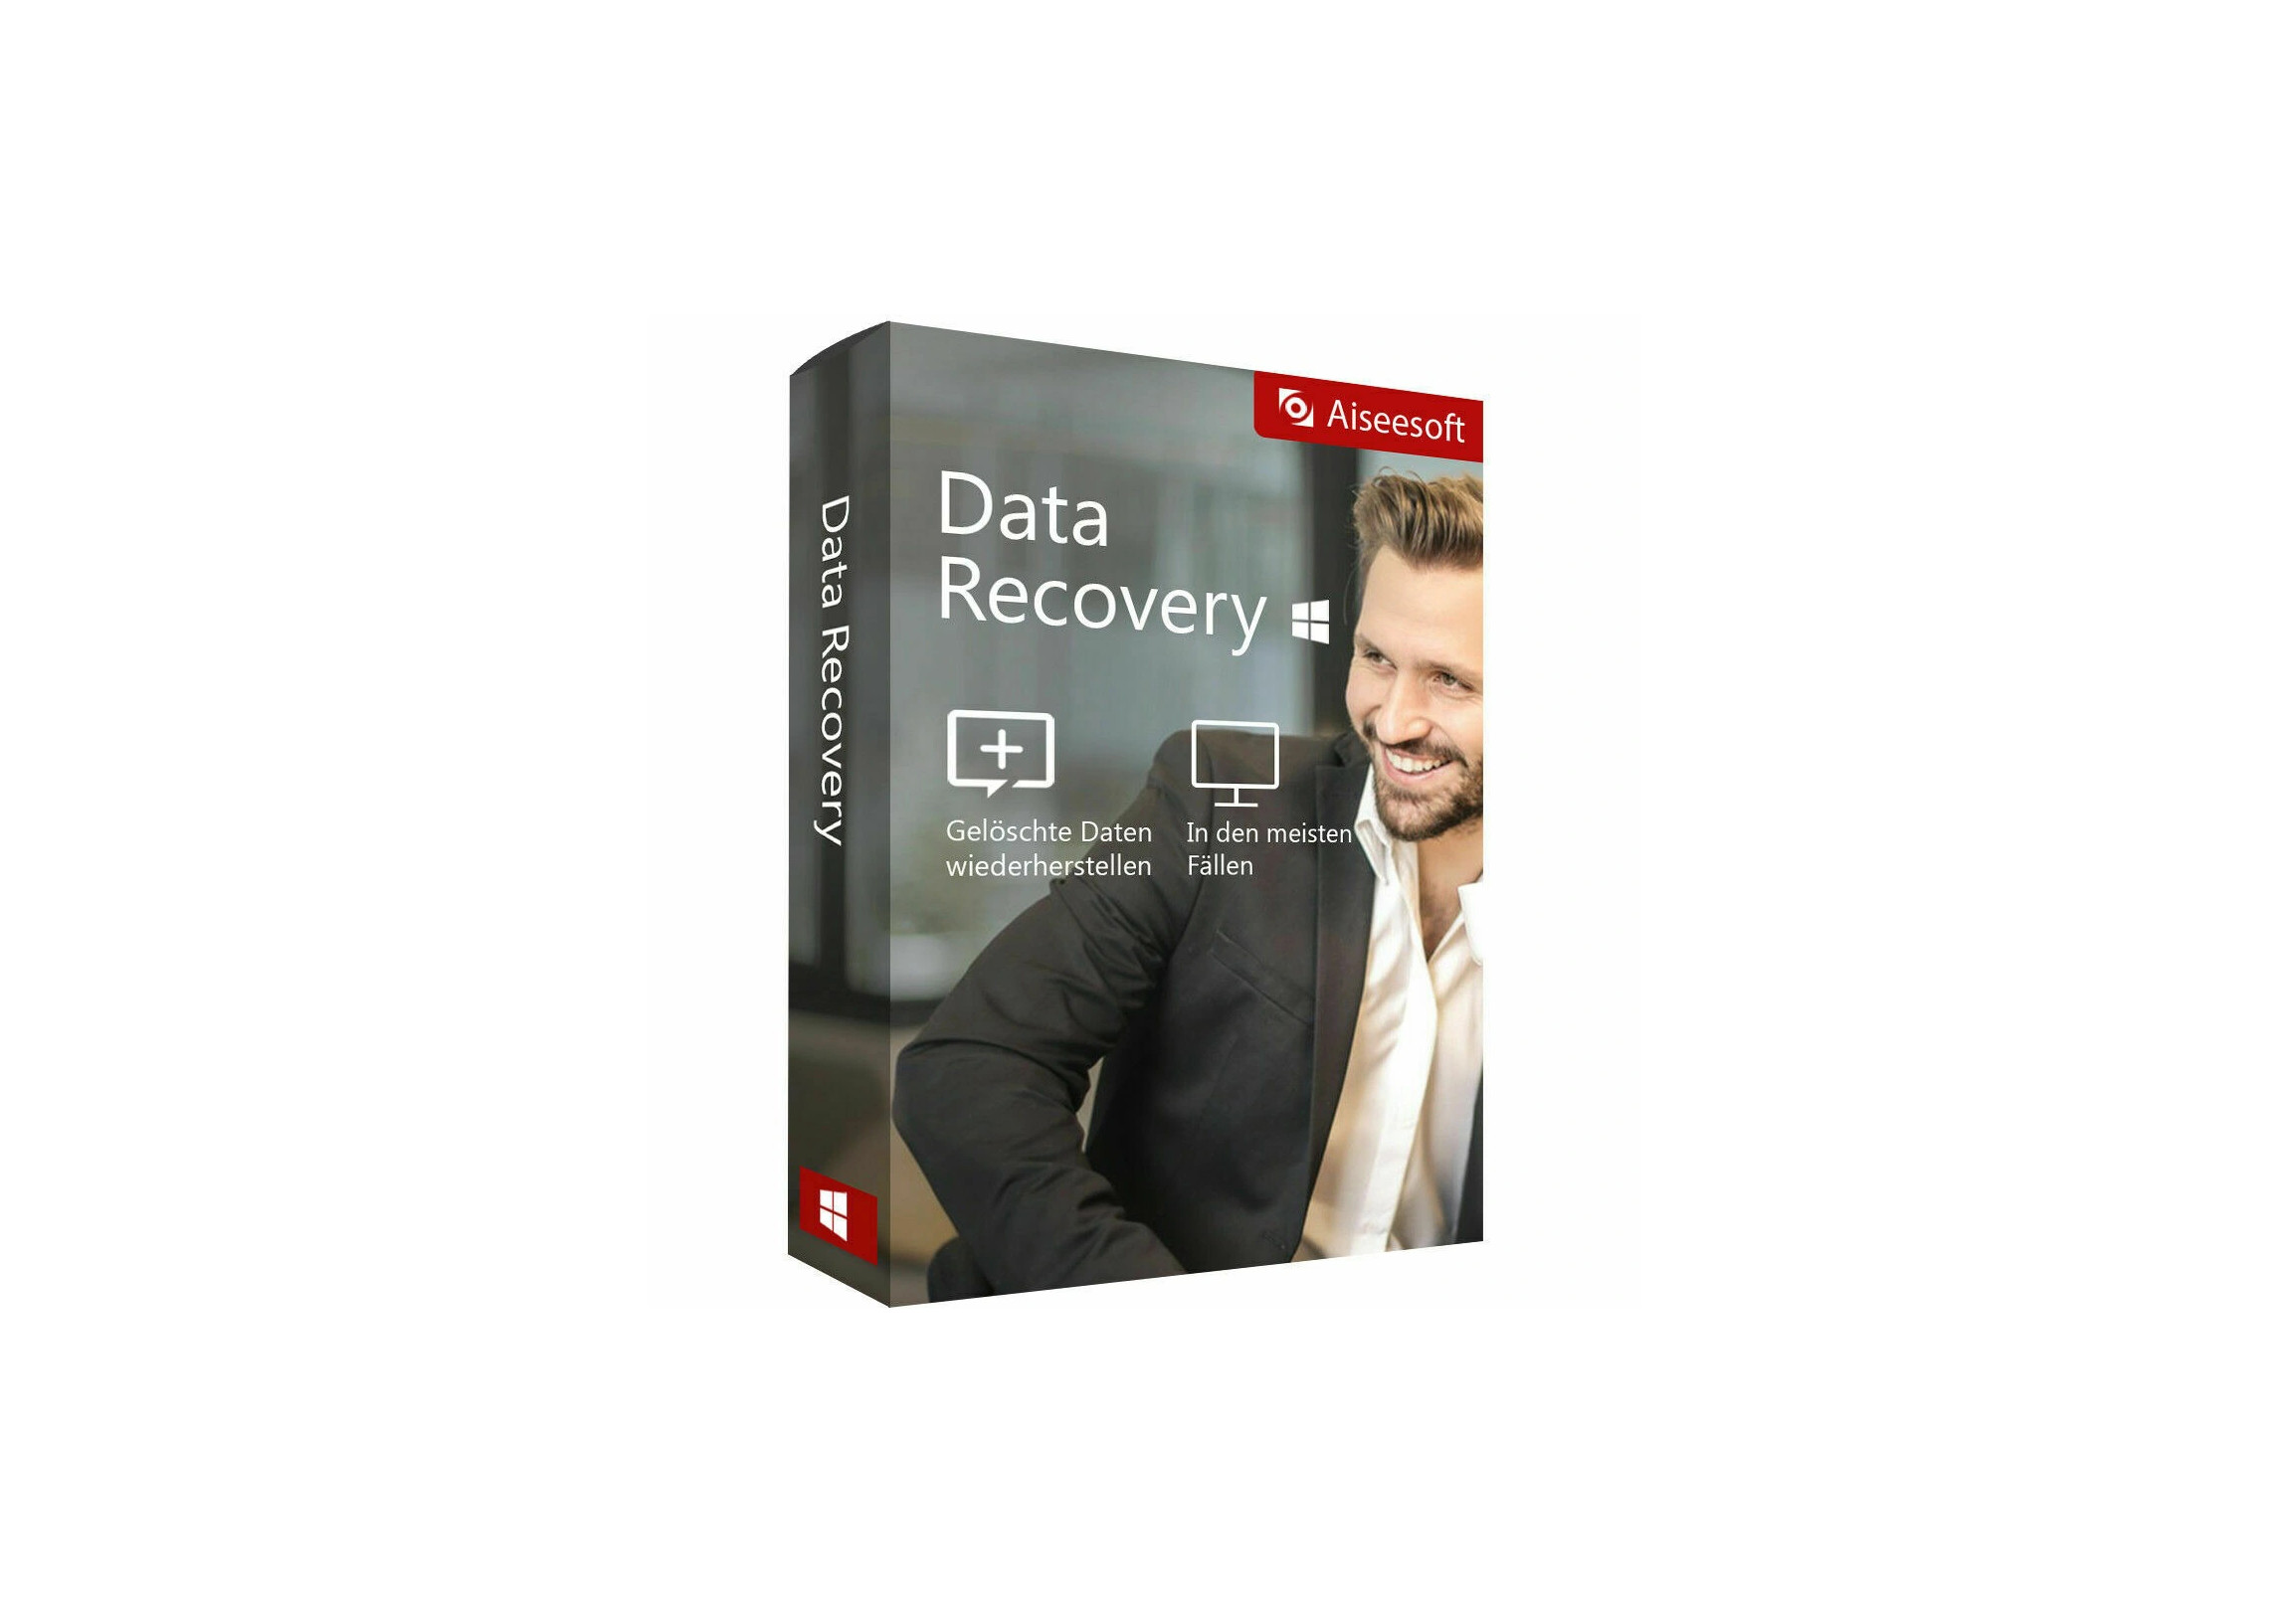 Aiseesoft Data Recovery Key (1 Year / 1 PC), 2.25 usd